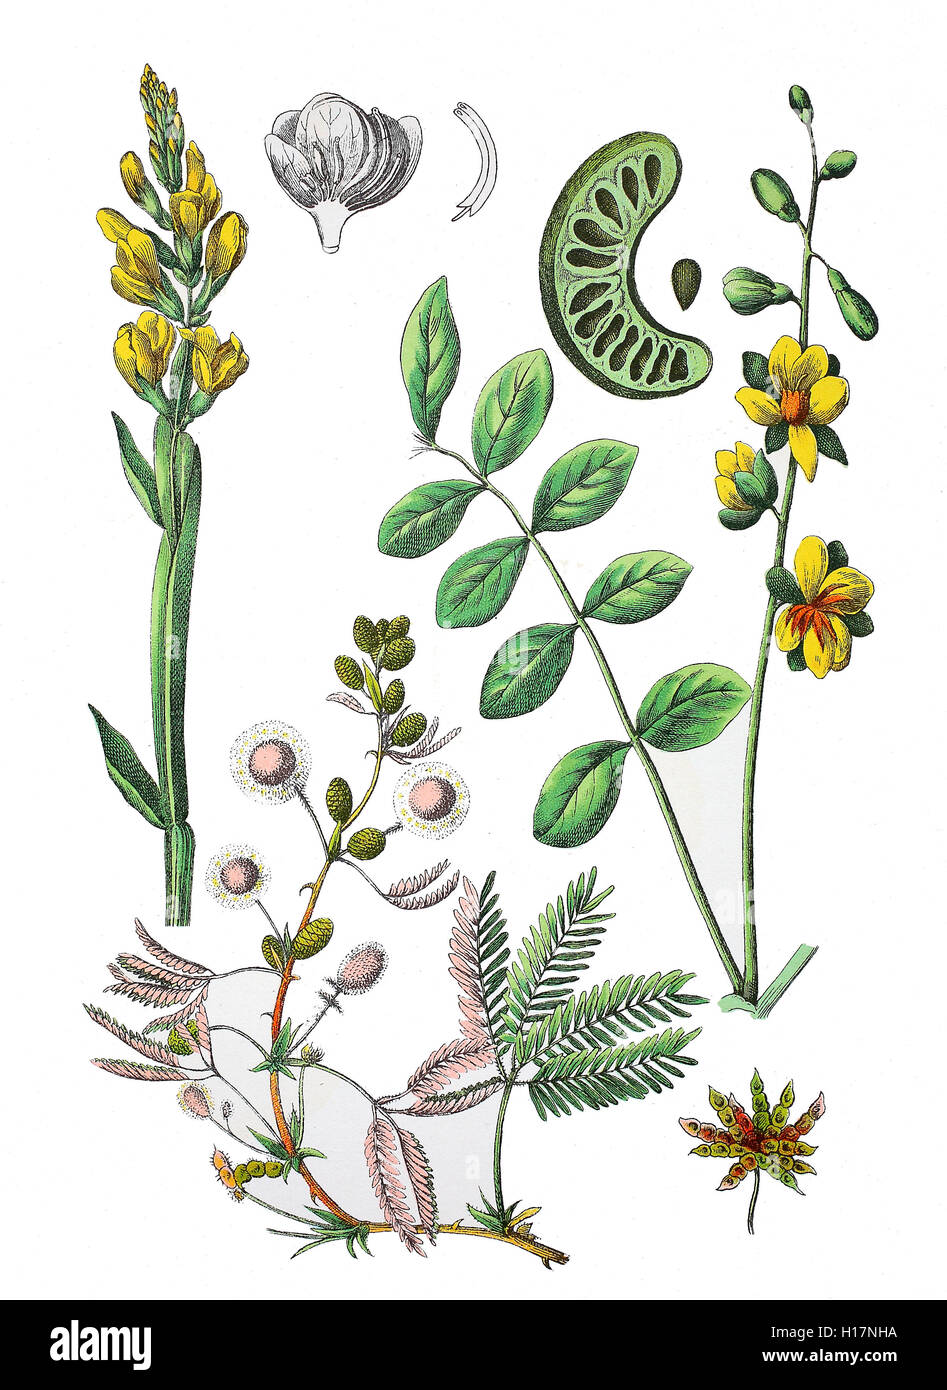 Gewoehnlicher Fluegelginster auch Fluegelginster oder Ramsele, Genista sagittalis (links oben), Sennespflanze, Cassia obtusifolia (rechts oben), Mimose auch Schamhafte Sinnpflanze, Mimosa pudica (unten), Stock Photo